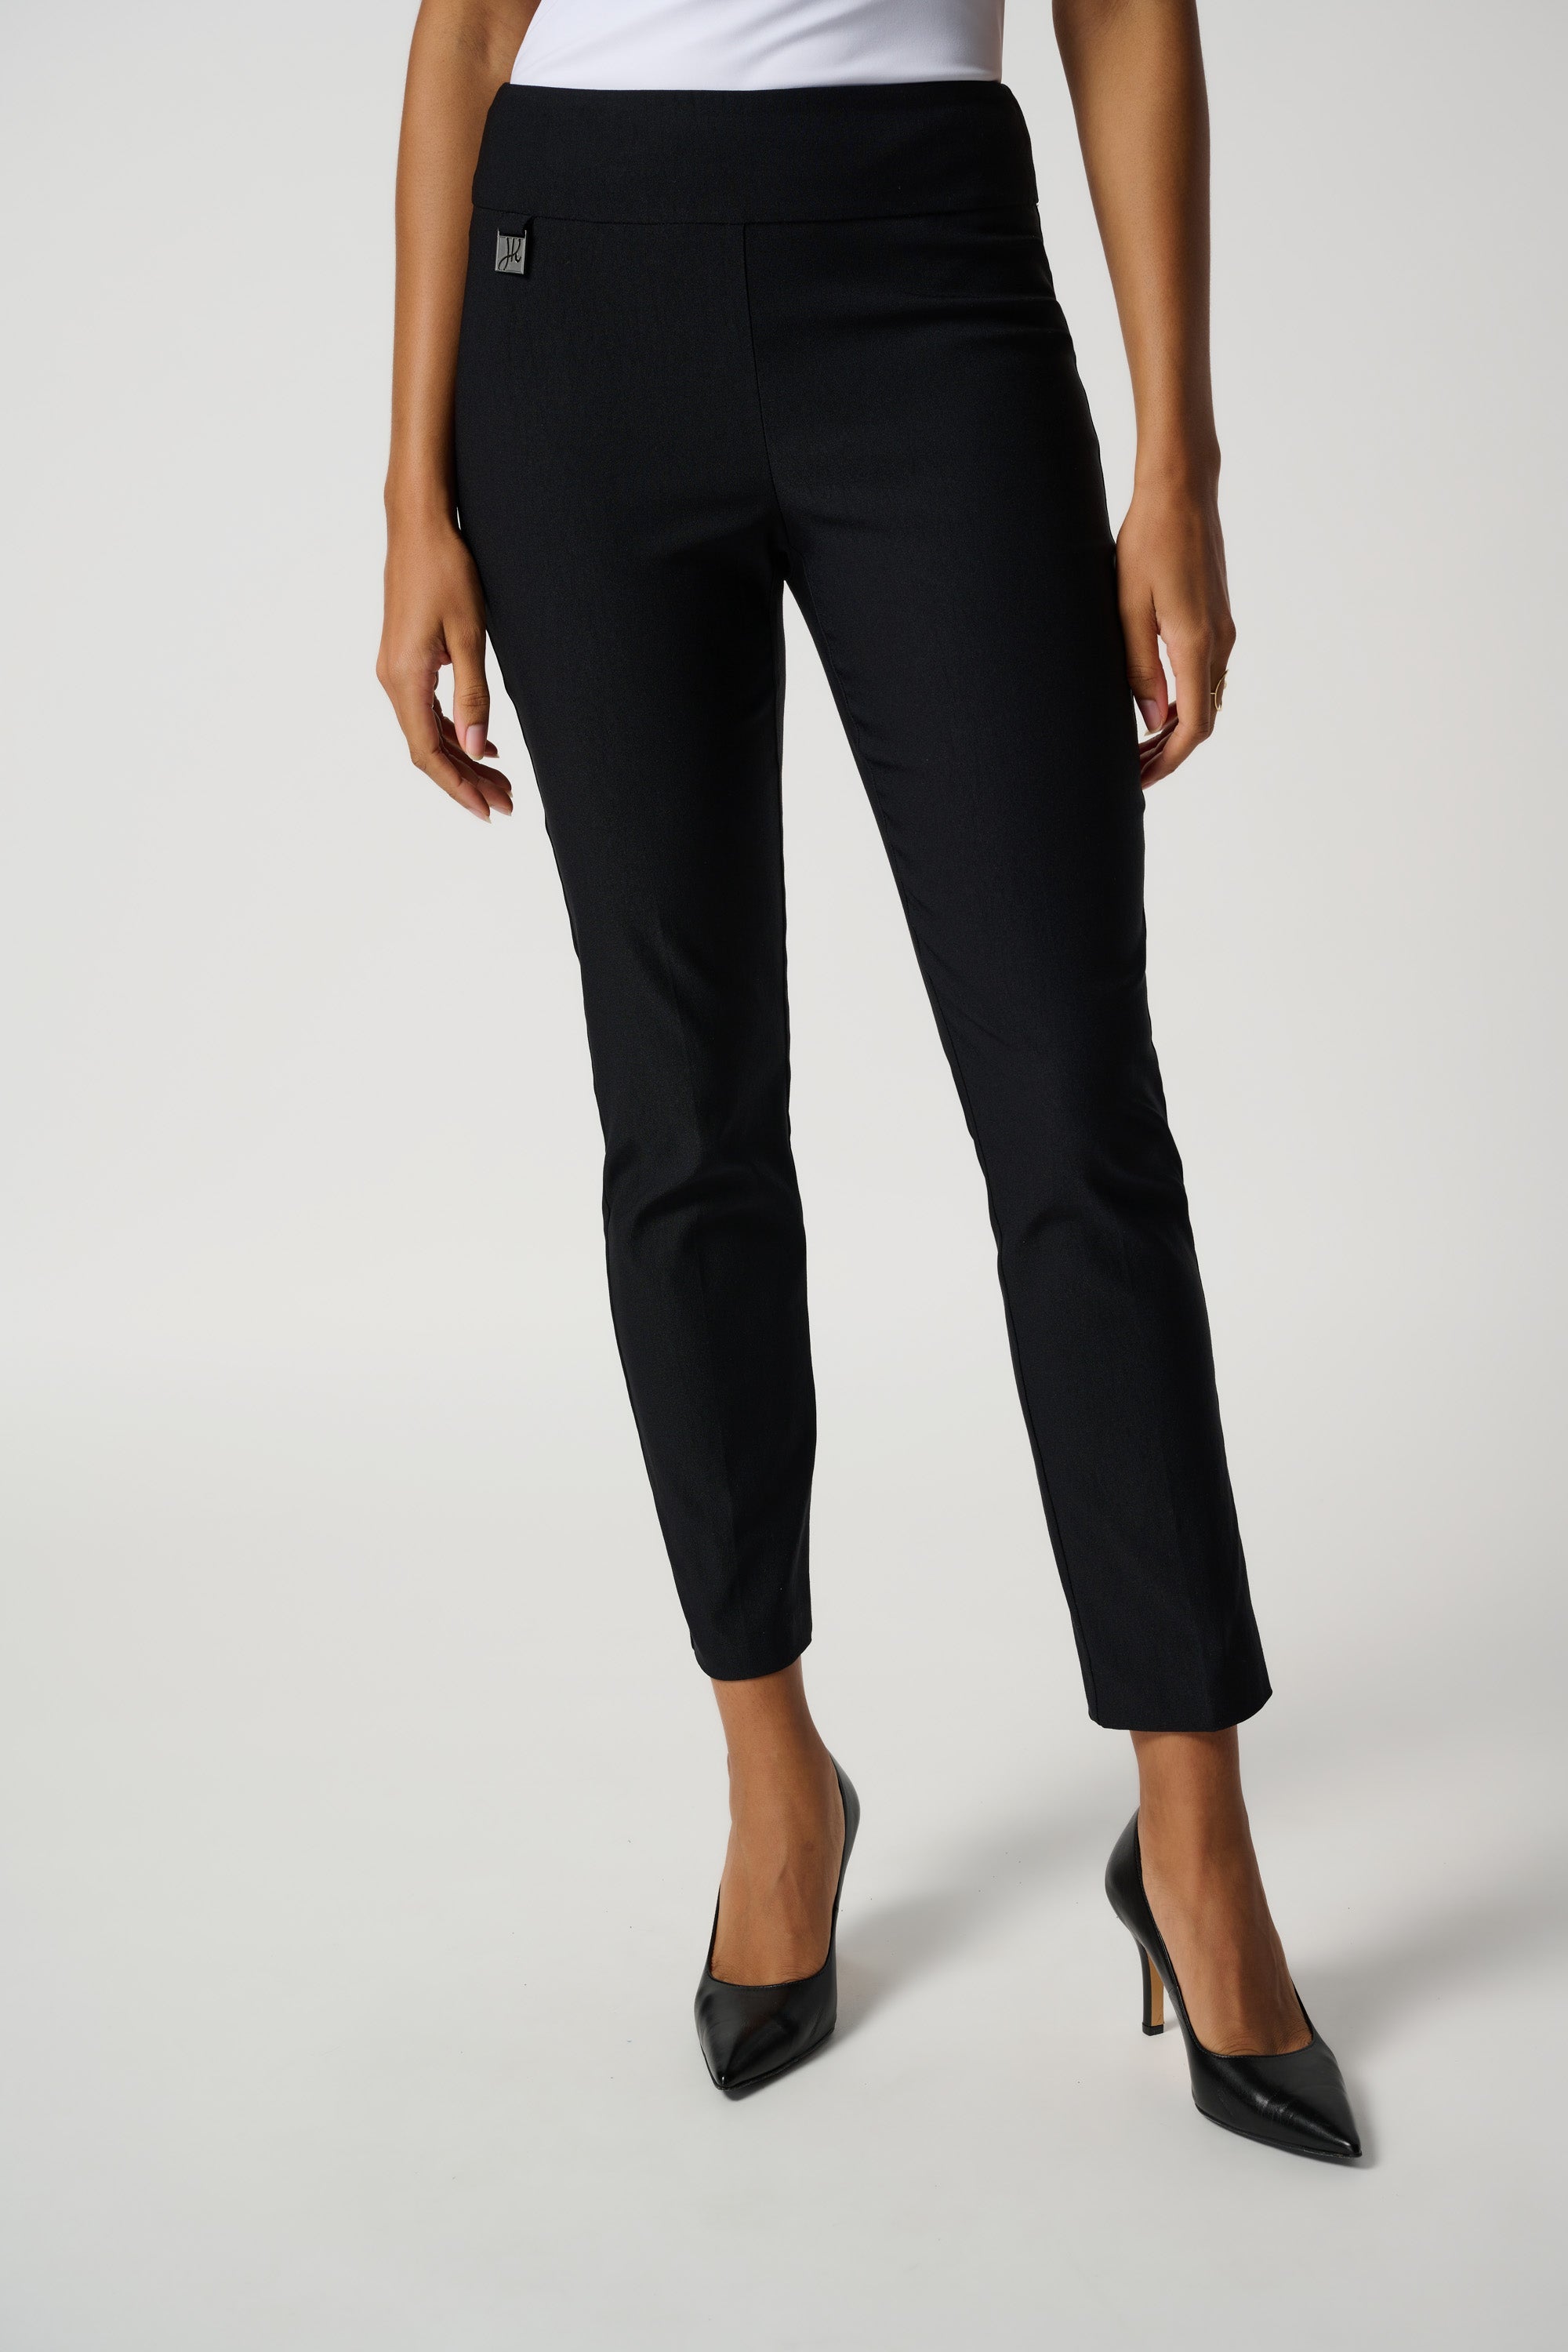 Joseph Ribkoff (201483NOS) Women's Classic Pull On Slim Pants in Black